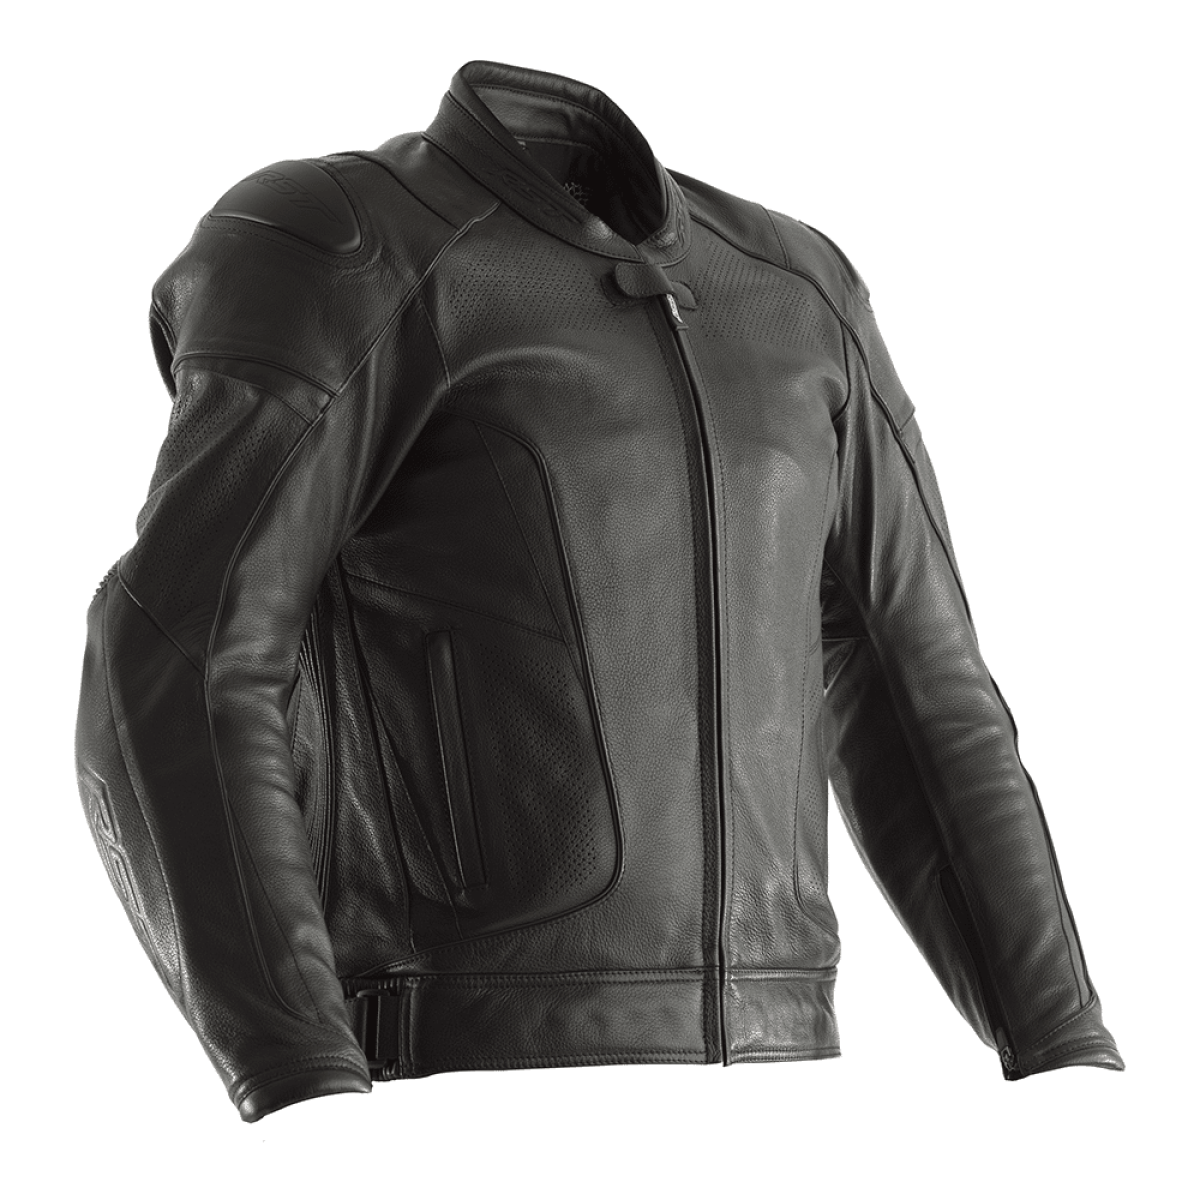 https://www.inemotion.com/wp-content/uploads/2020/03/102973-rst-gt-leather-jacket-airbag-black-front-1200x1200-c-default.png